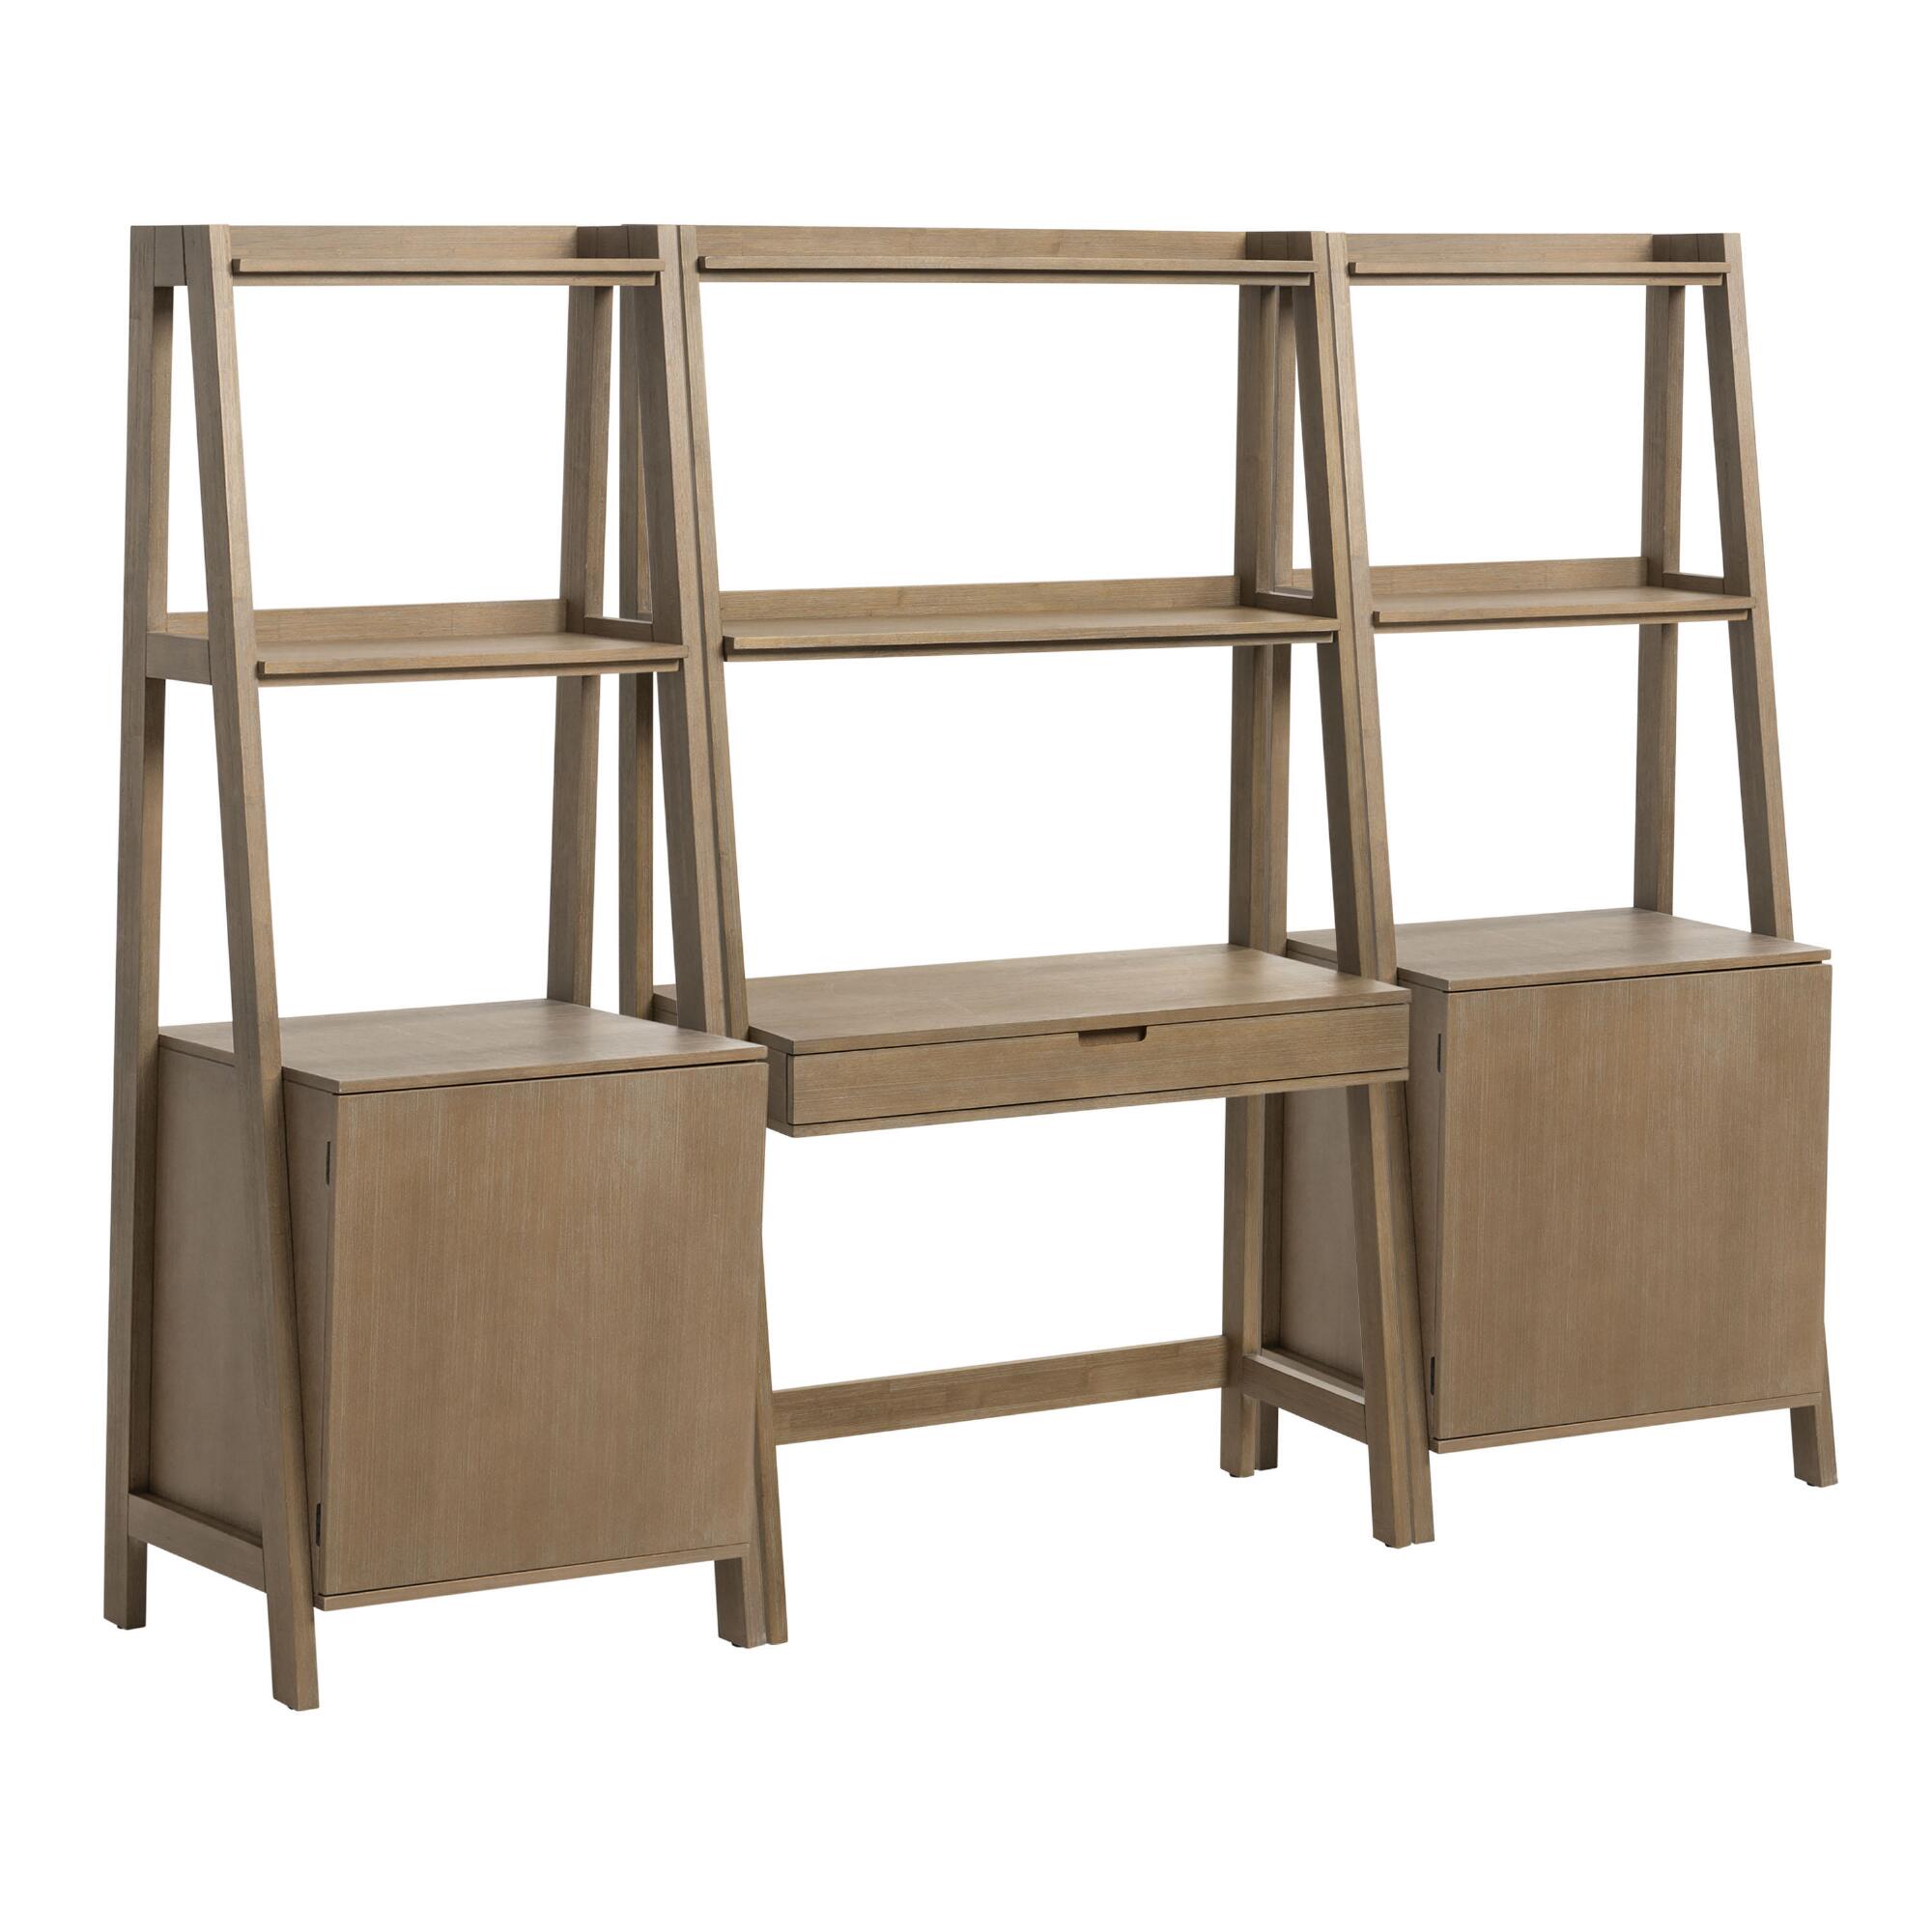 Graywash Modular Elias Desk and Shelves 3 Piece Set by World Market